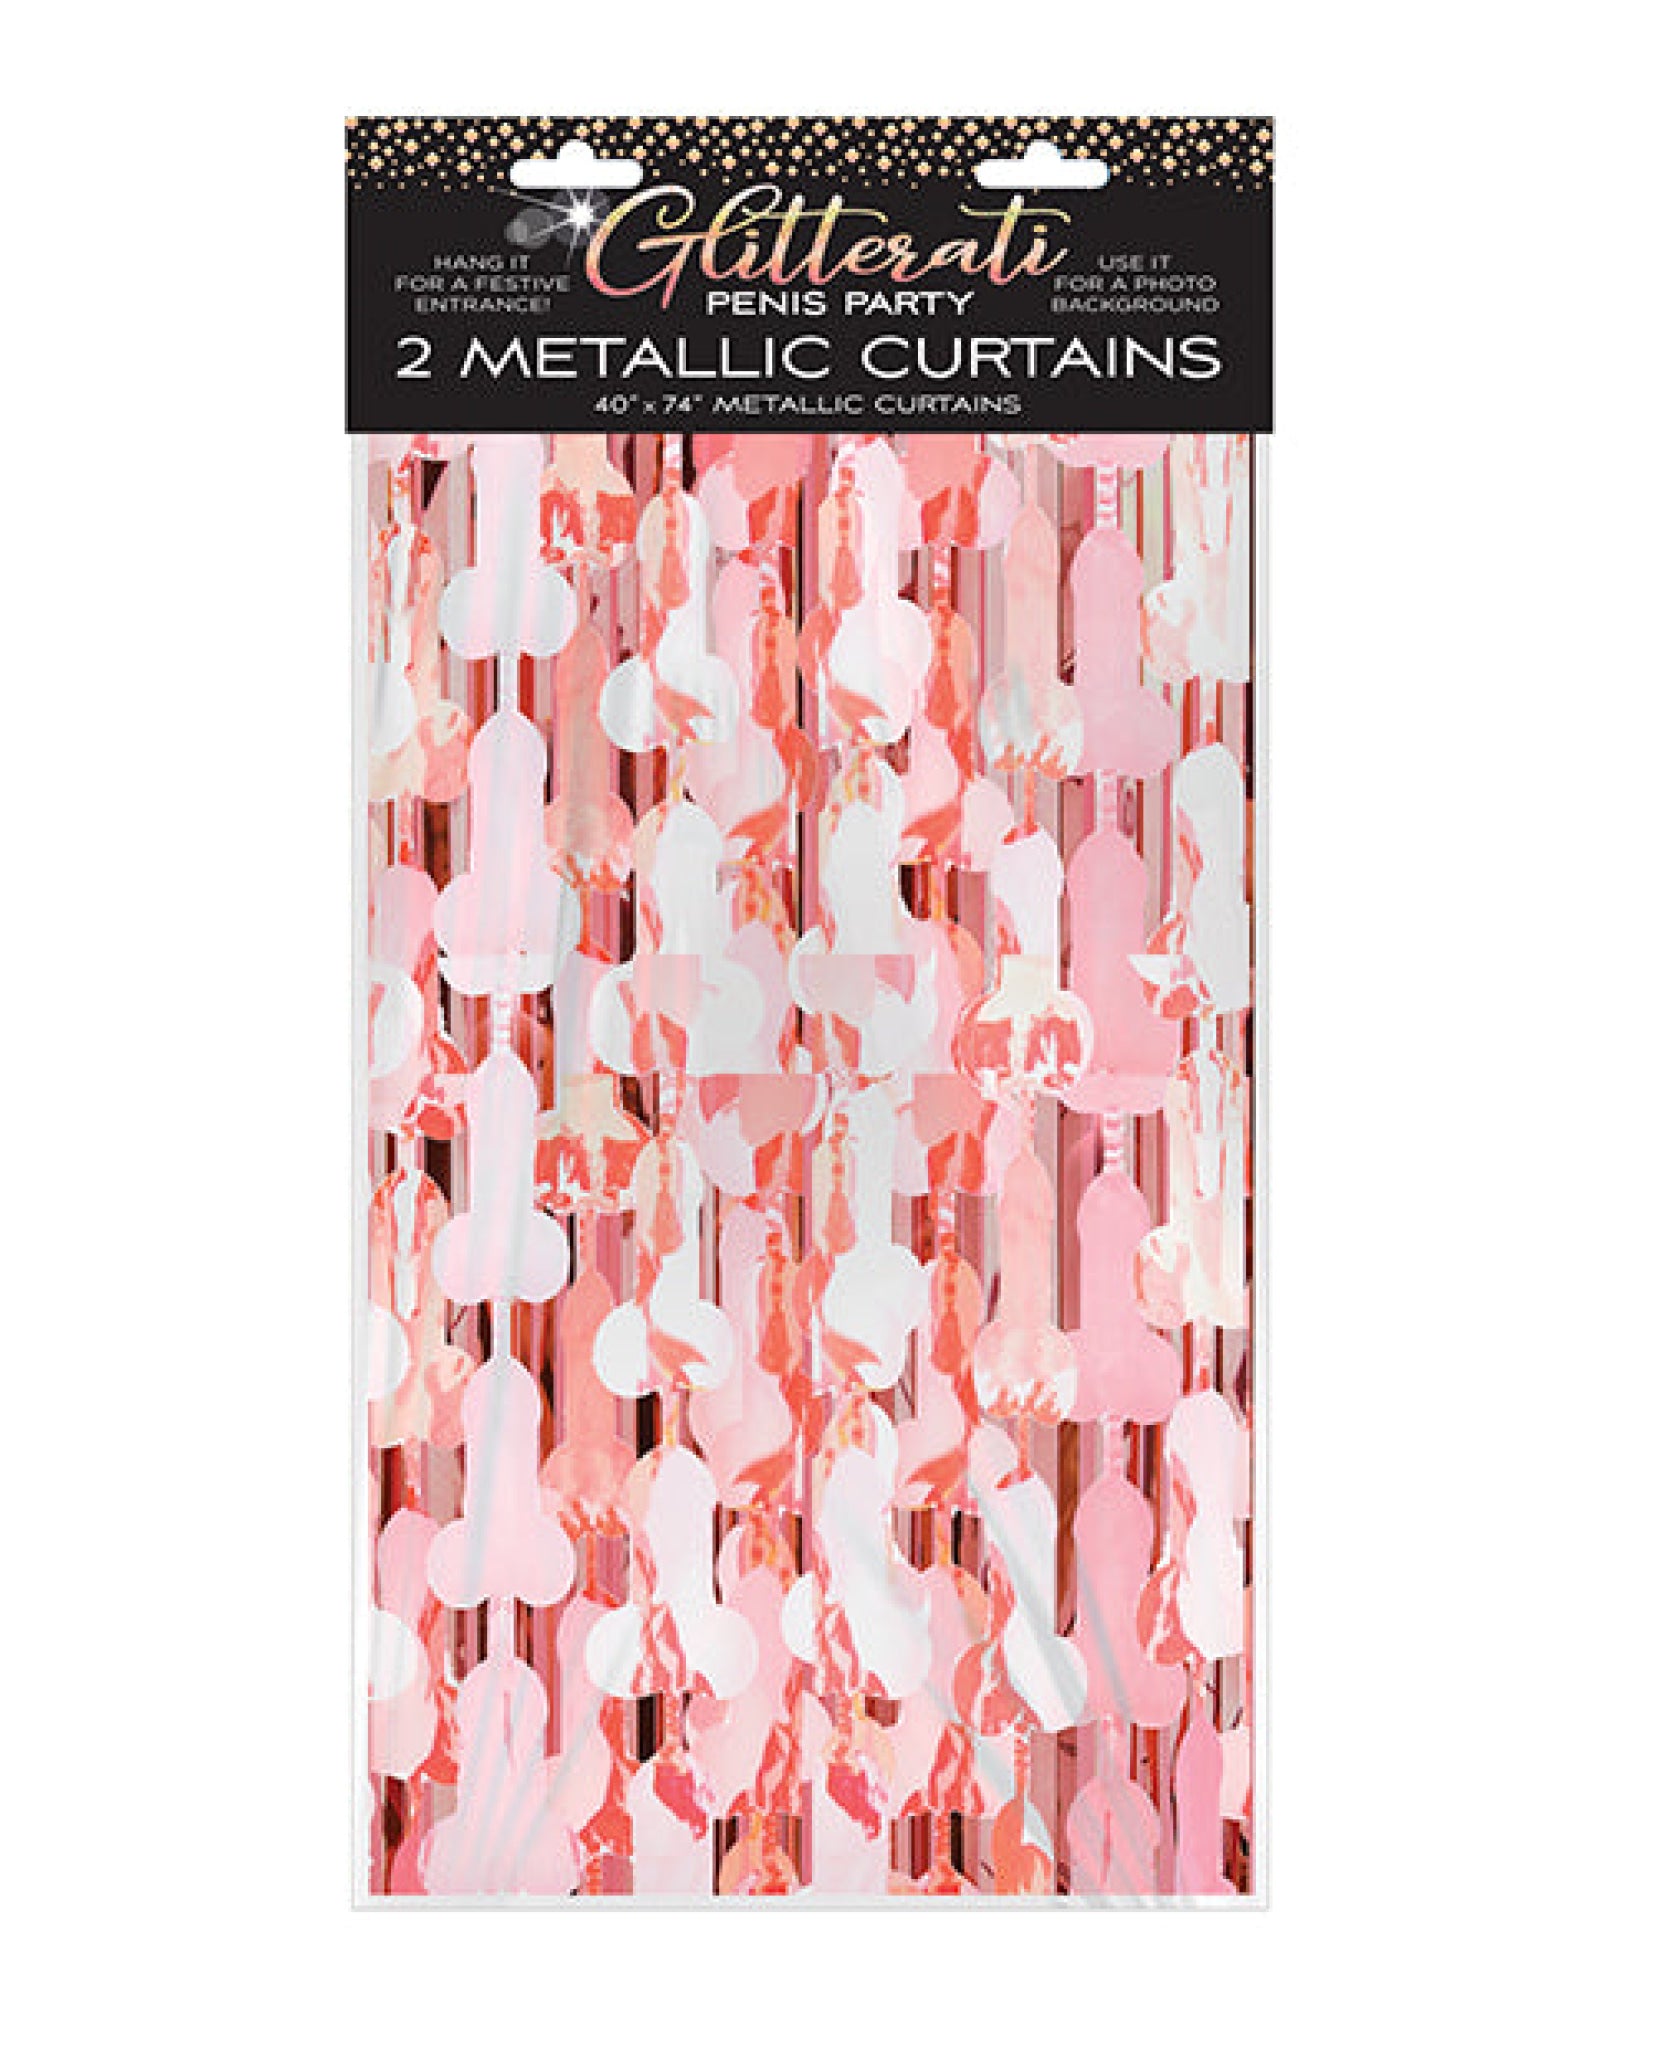 Glitterati Penis Foil Curtain Little Genie Productions LLC